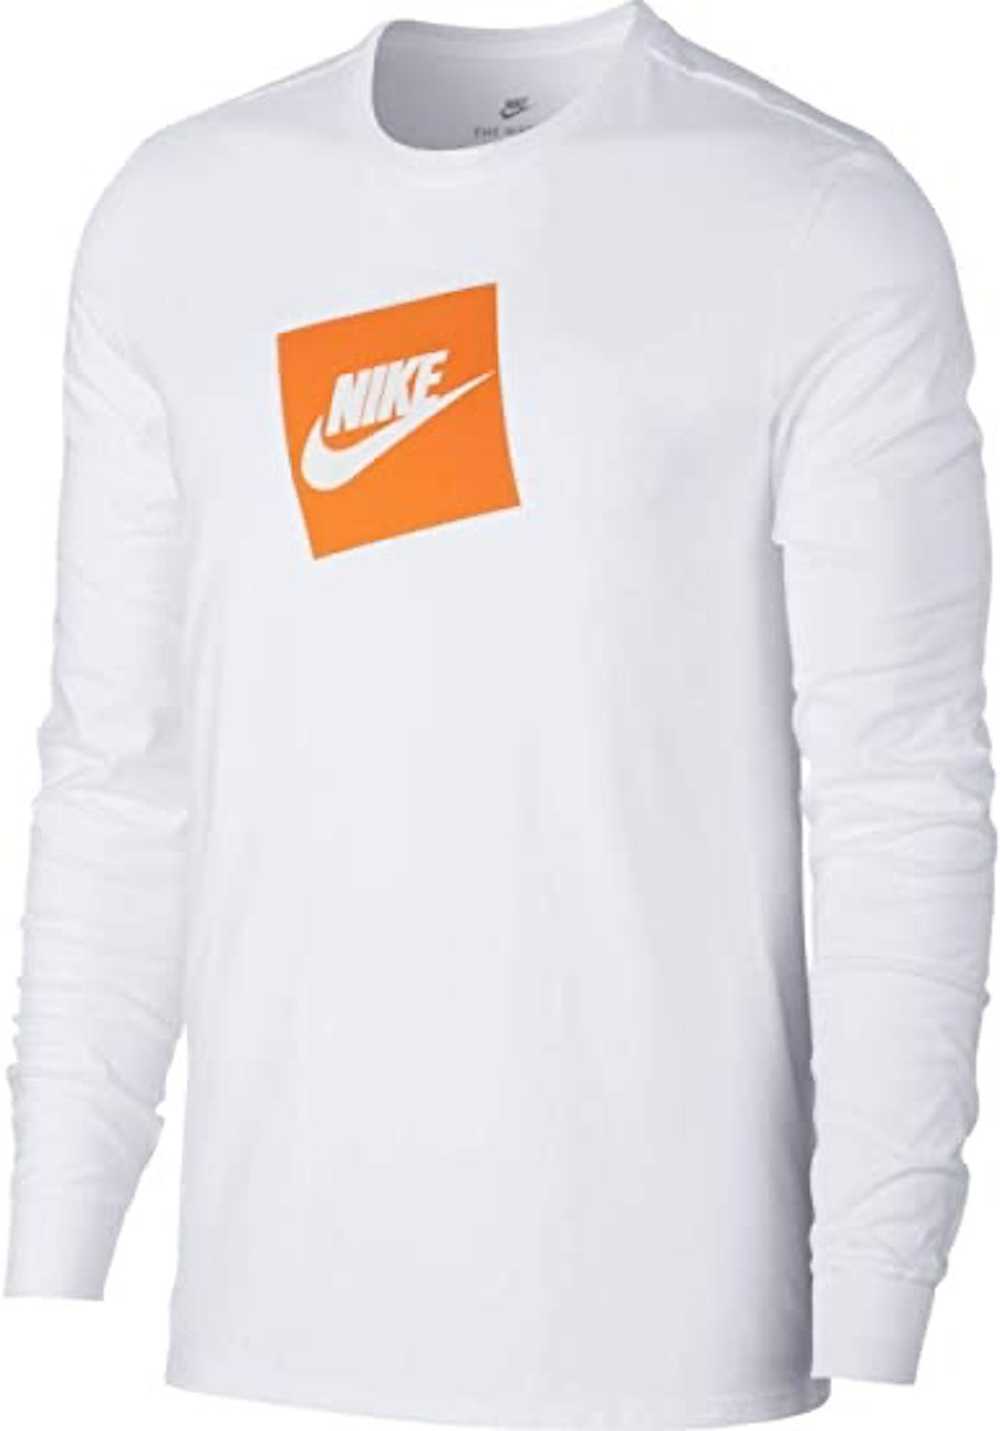 Nike Nike logo log sleeve tee - image 3